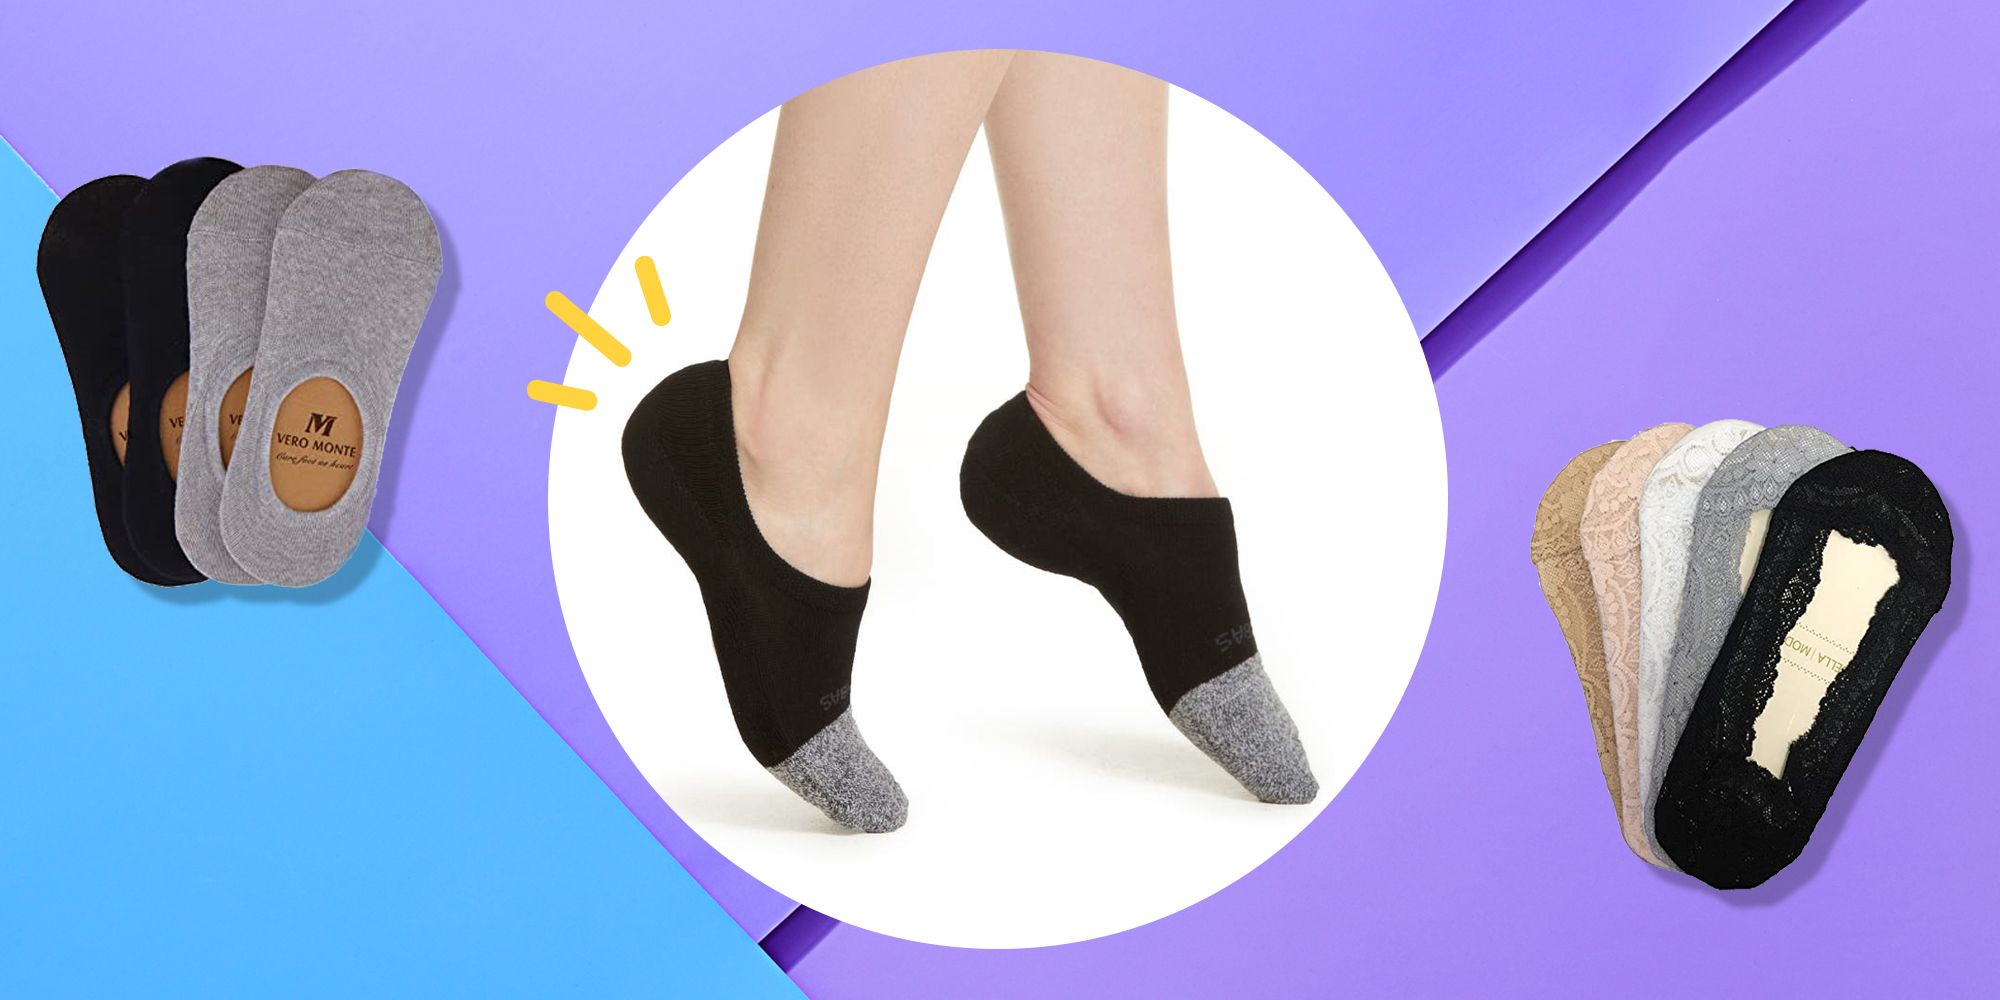 Zando Womens Casual Soft Anti Slip Cotton Invisible Socks No Show Socks For Women Low Cut Flat Boat Line Socks